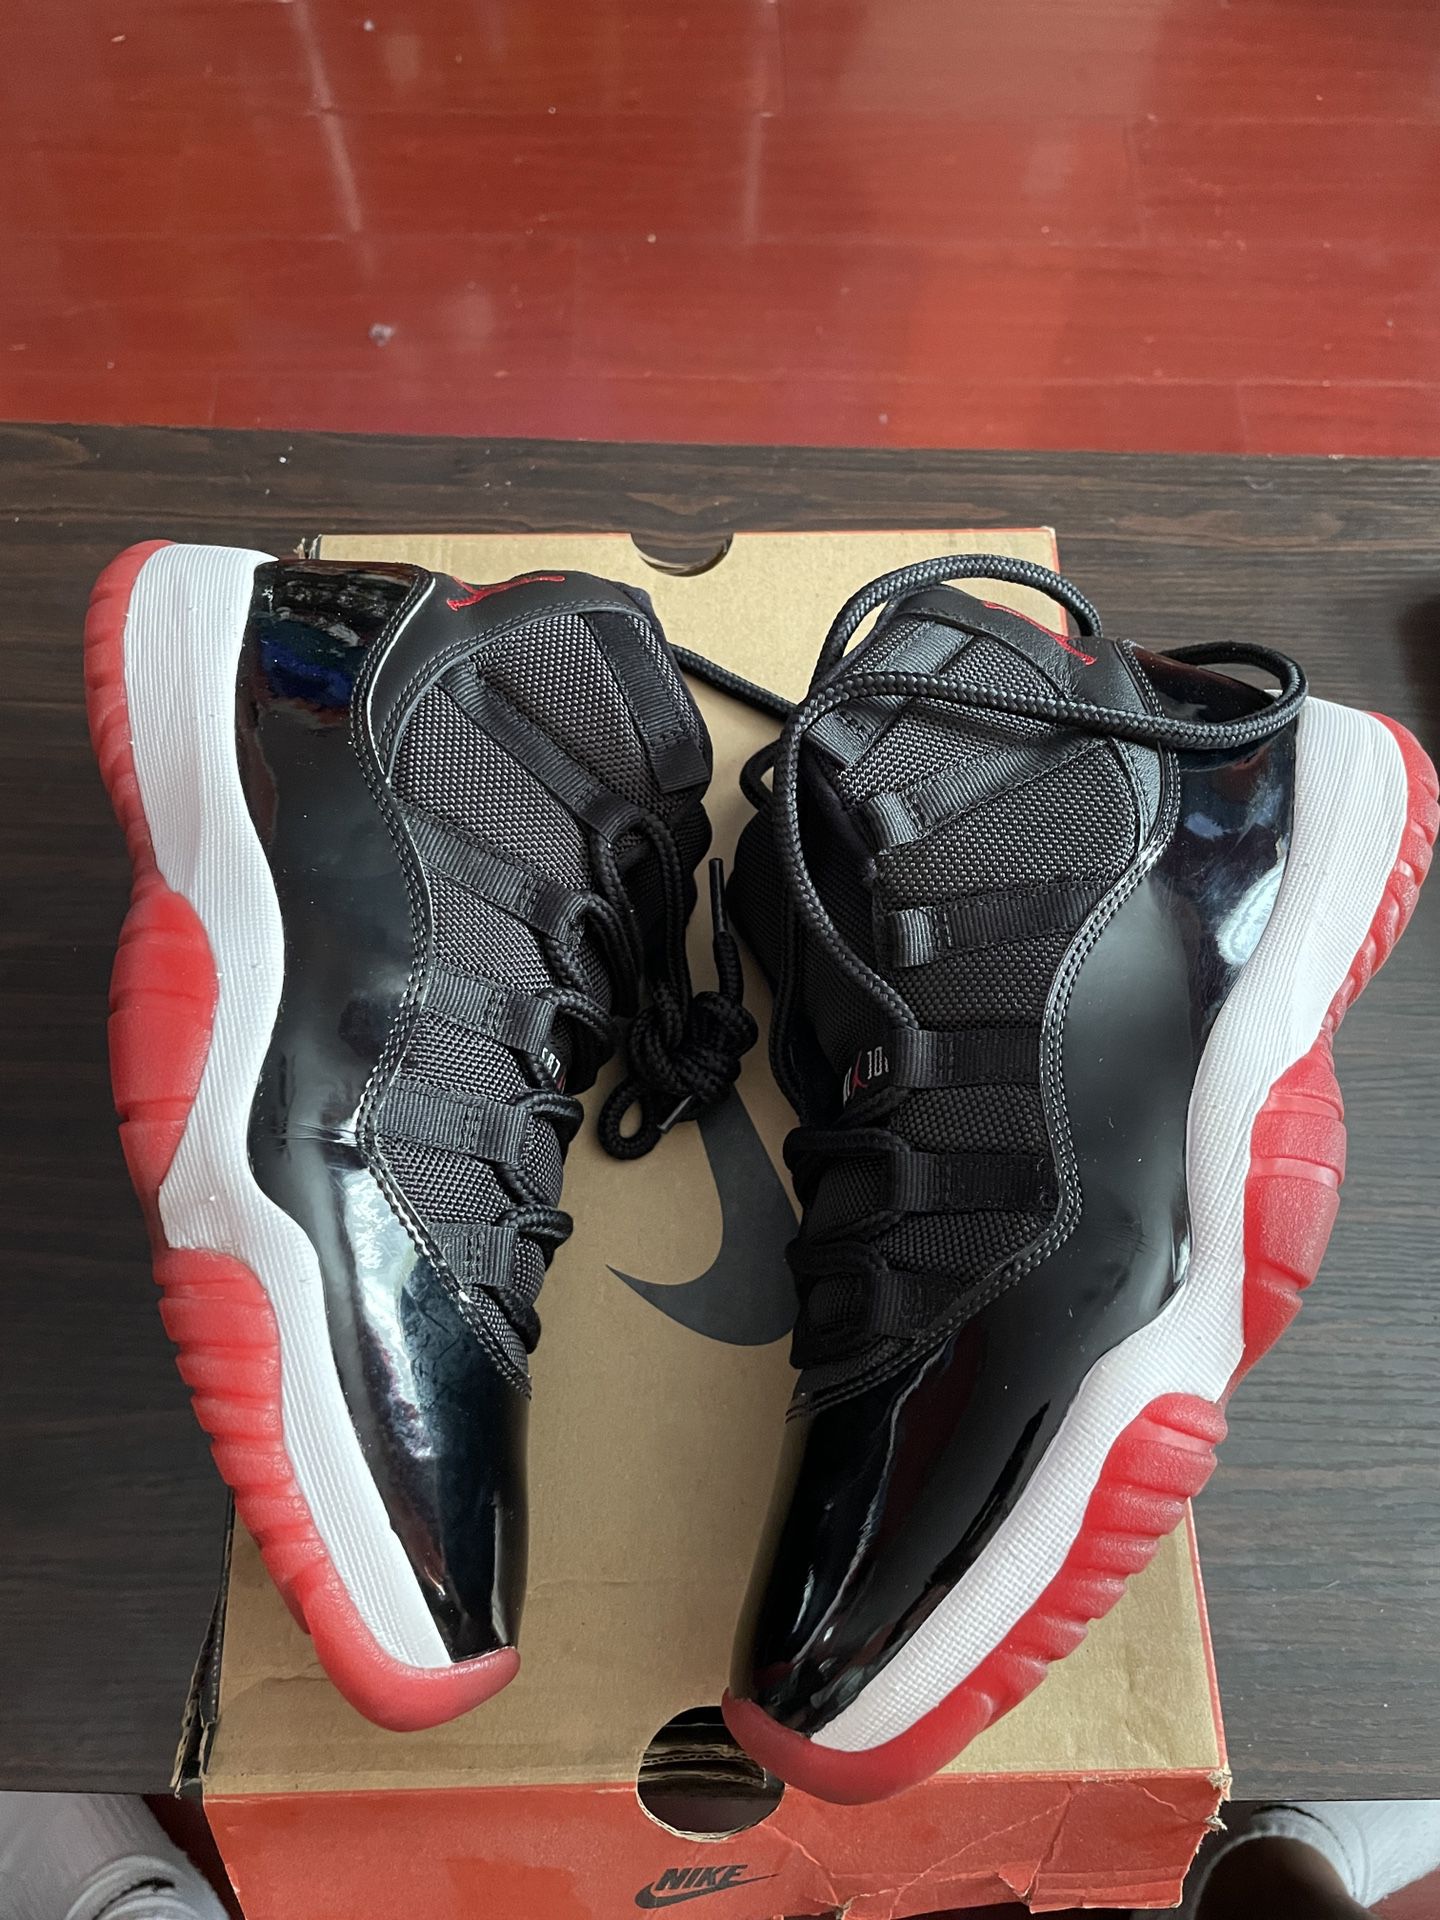 Jordan 11 Bred 2019 Size 8.5